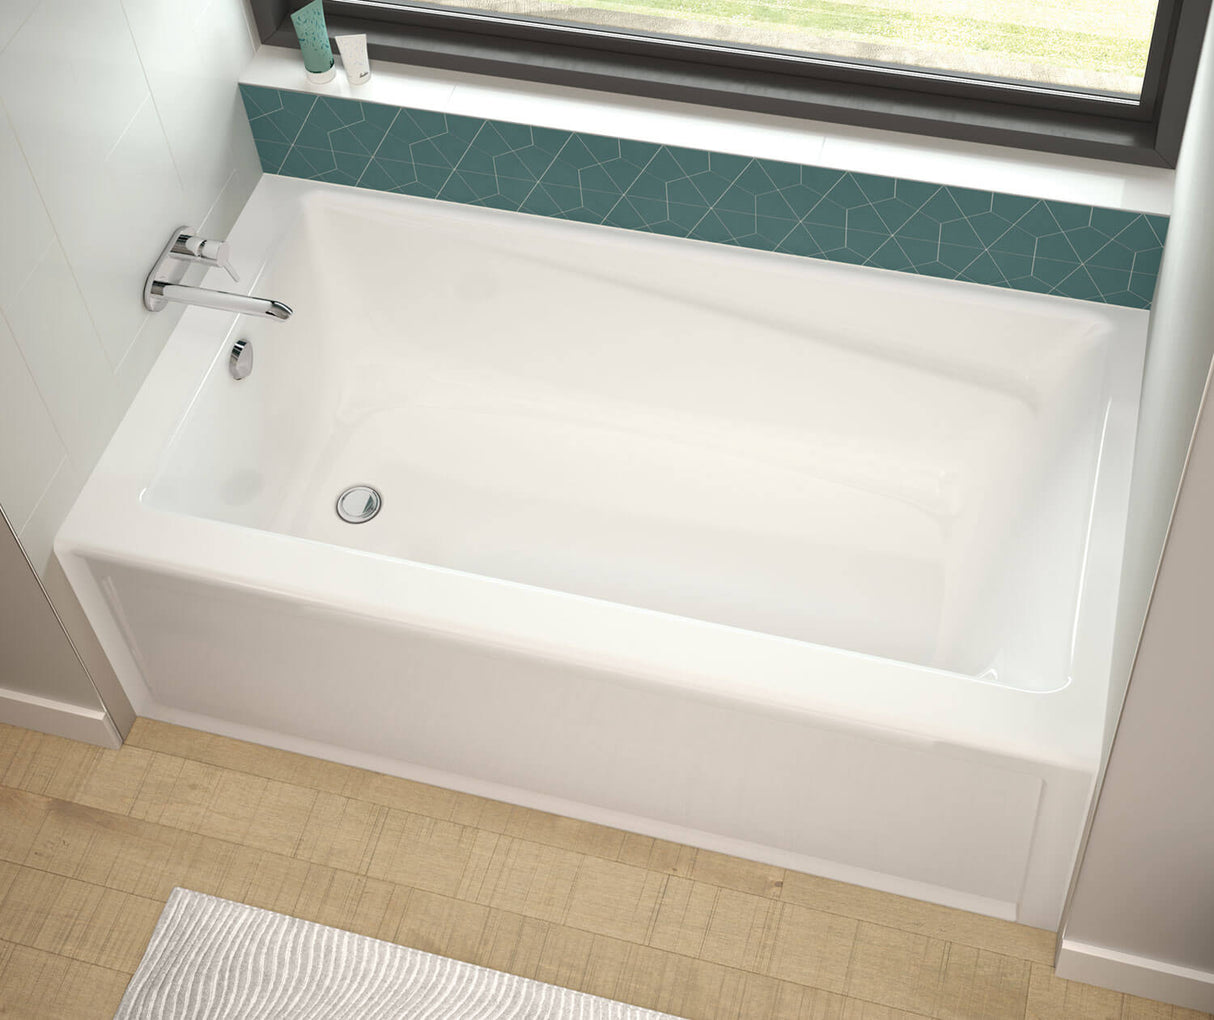 MAAX 105511-103-001-100 Exhibit 6030 IFS AFR Acrylic Alcove Left-Hand Drain Aeroeffect Bathtub in White